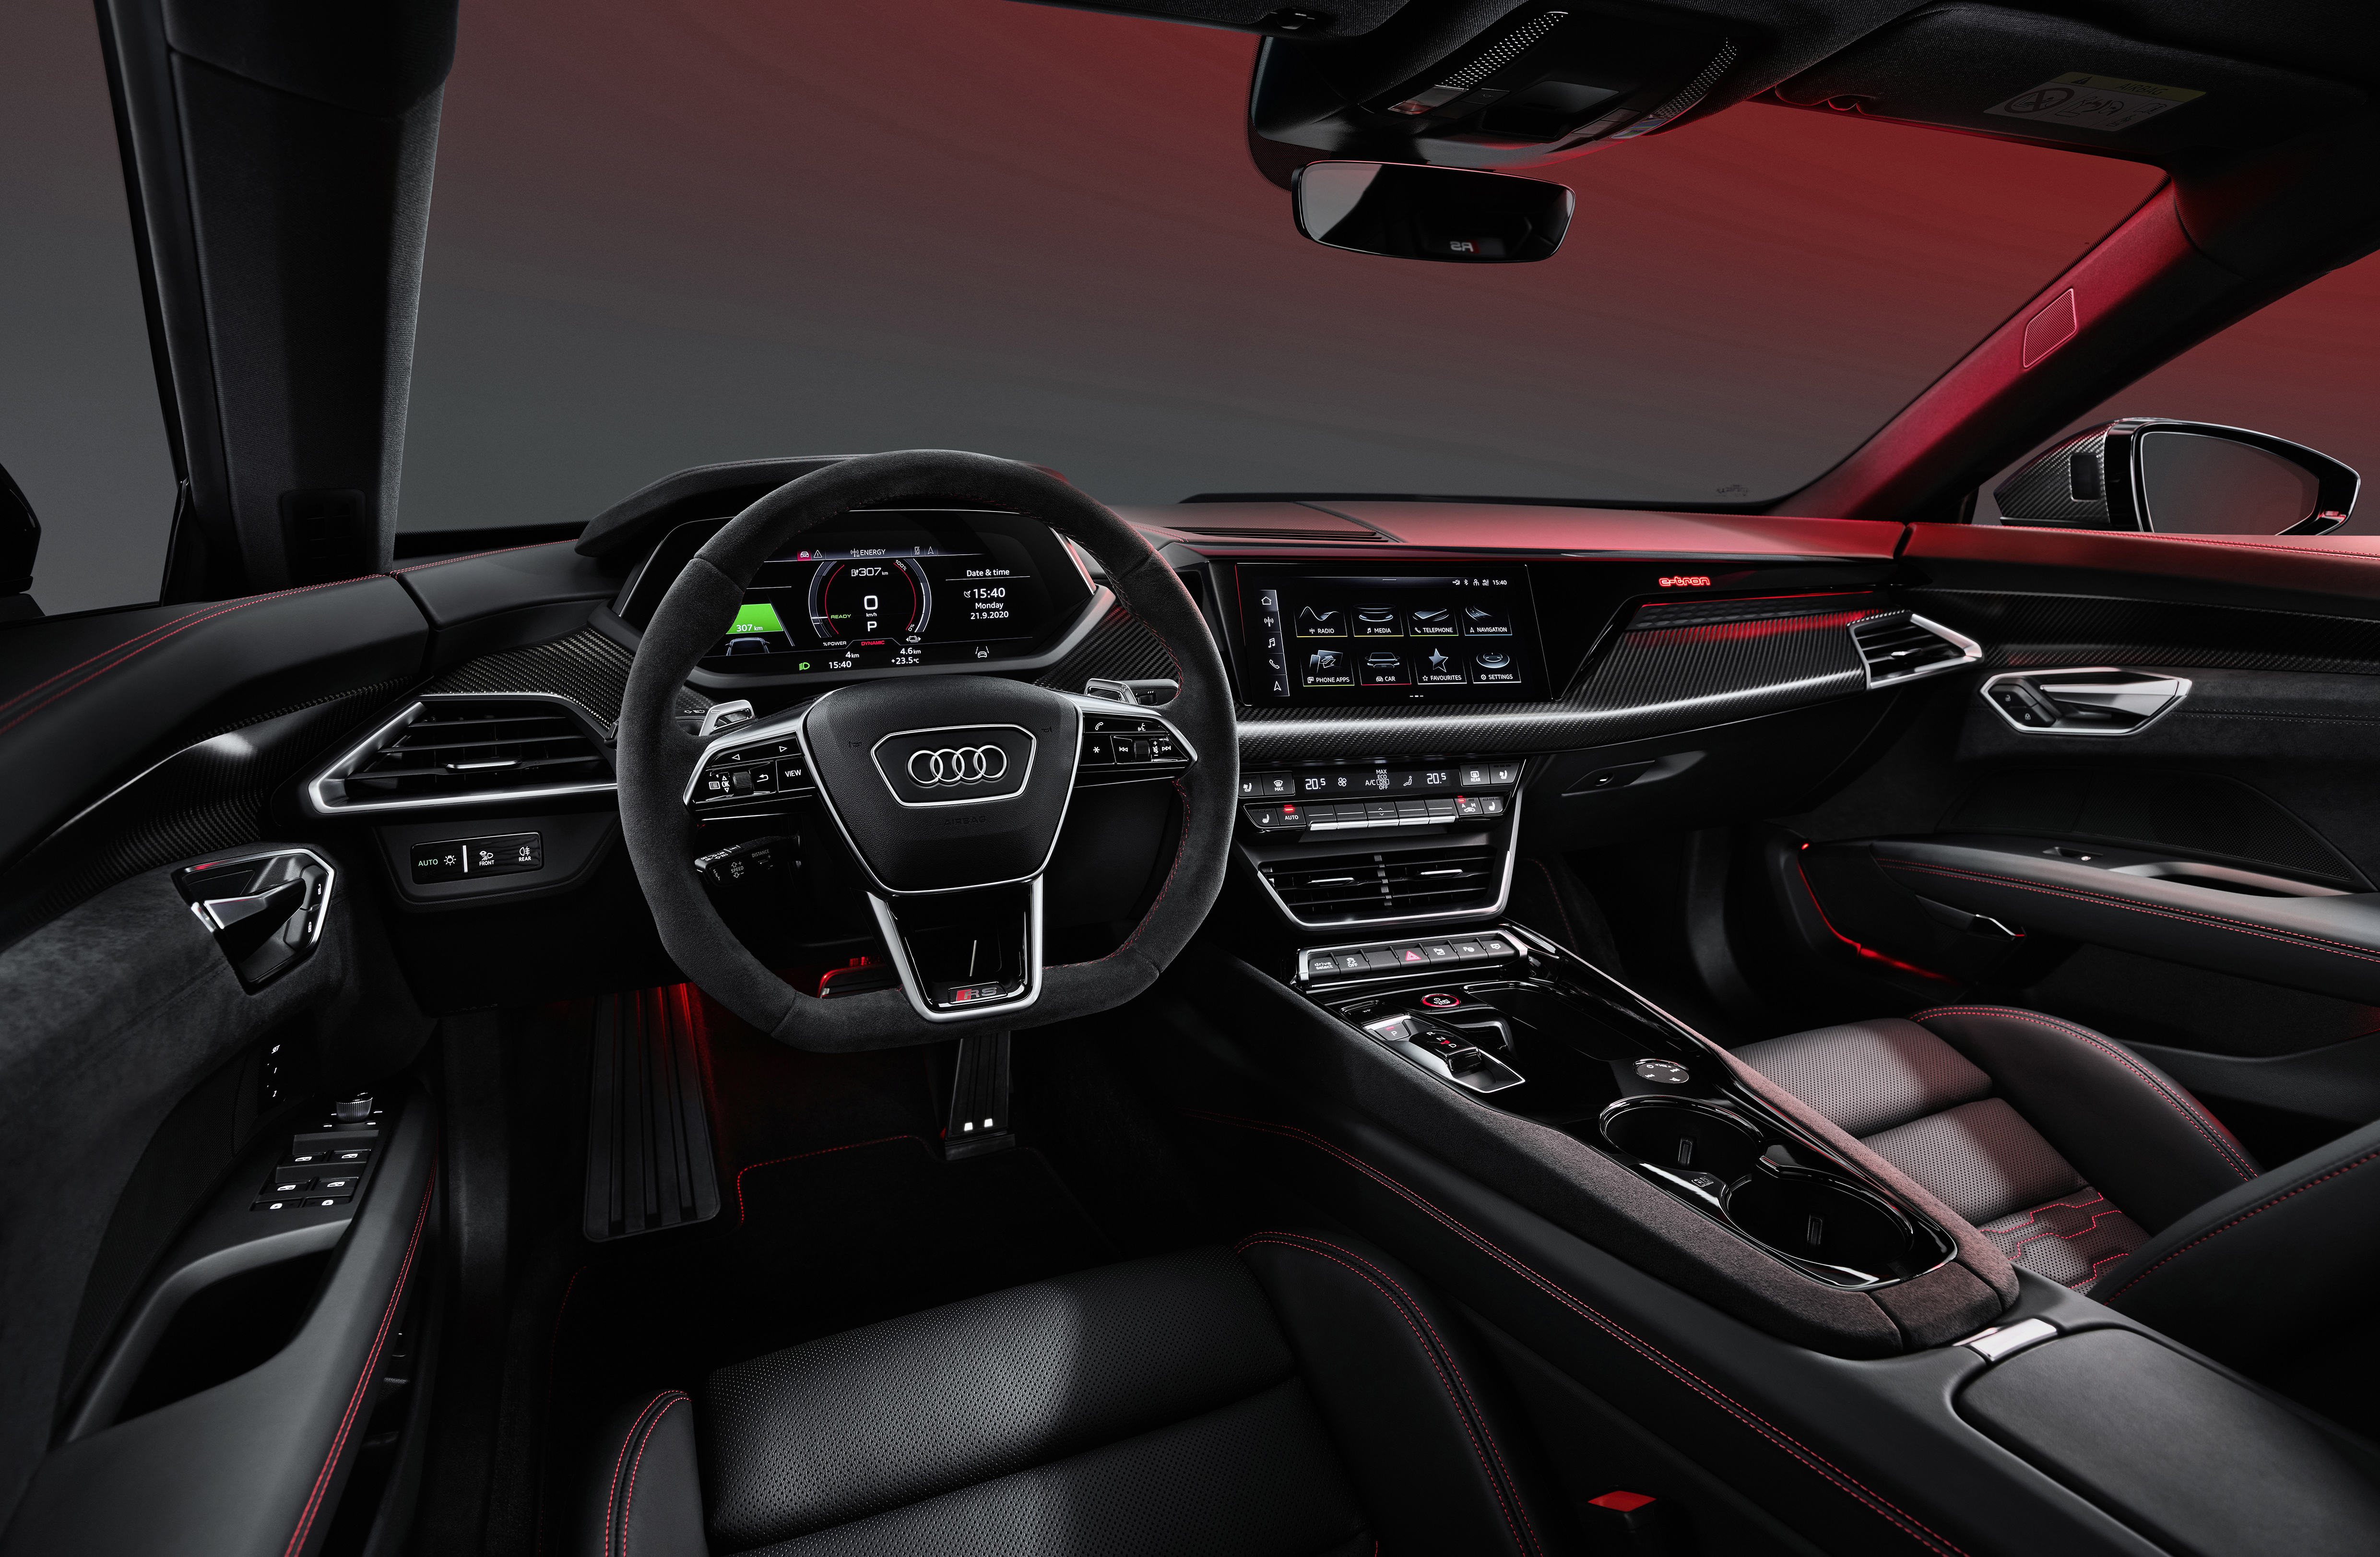 Interior of the Audi e-tron electric car